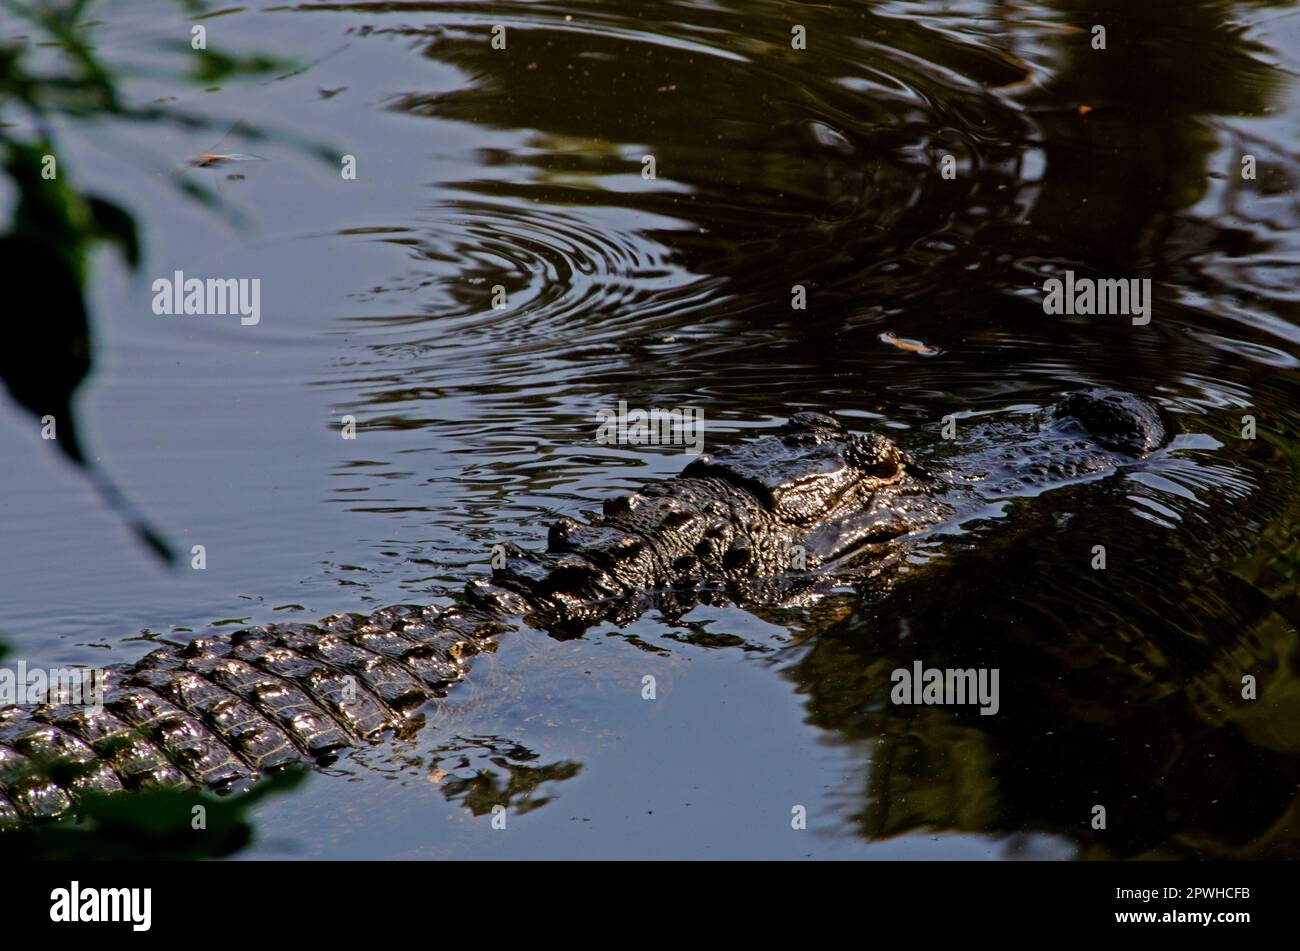 American Alligator Goes For A Morning Swim In A Hilton Head Island